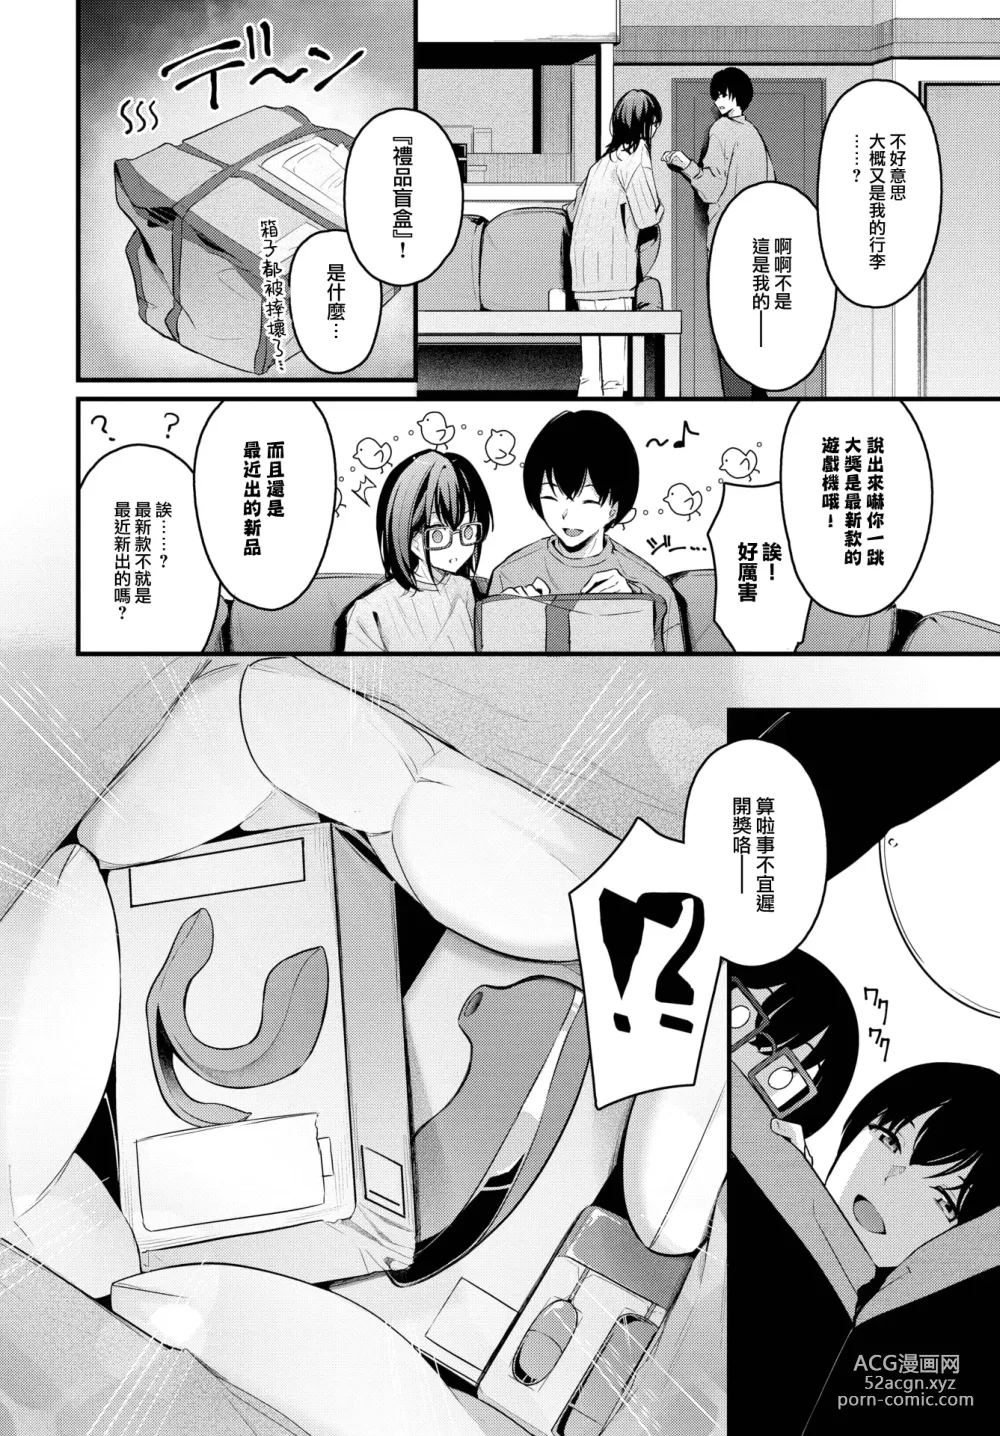 Page 3 of manga Futari Gurashi